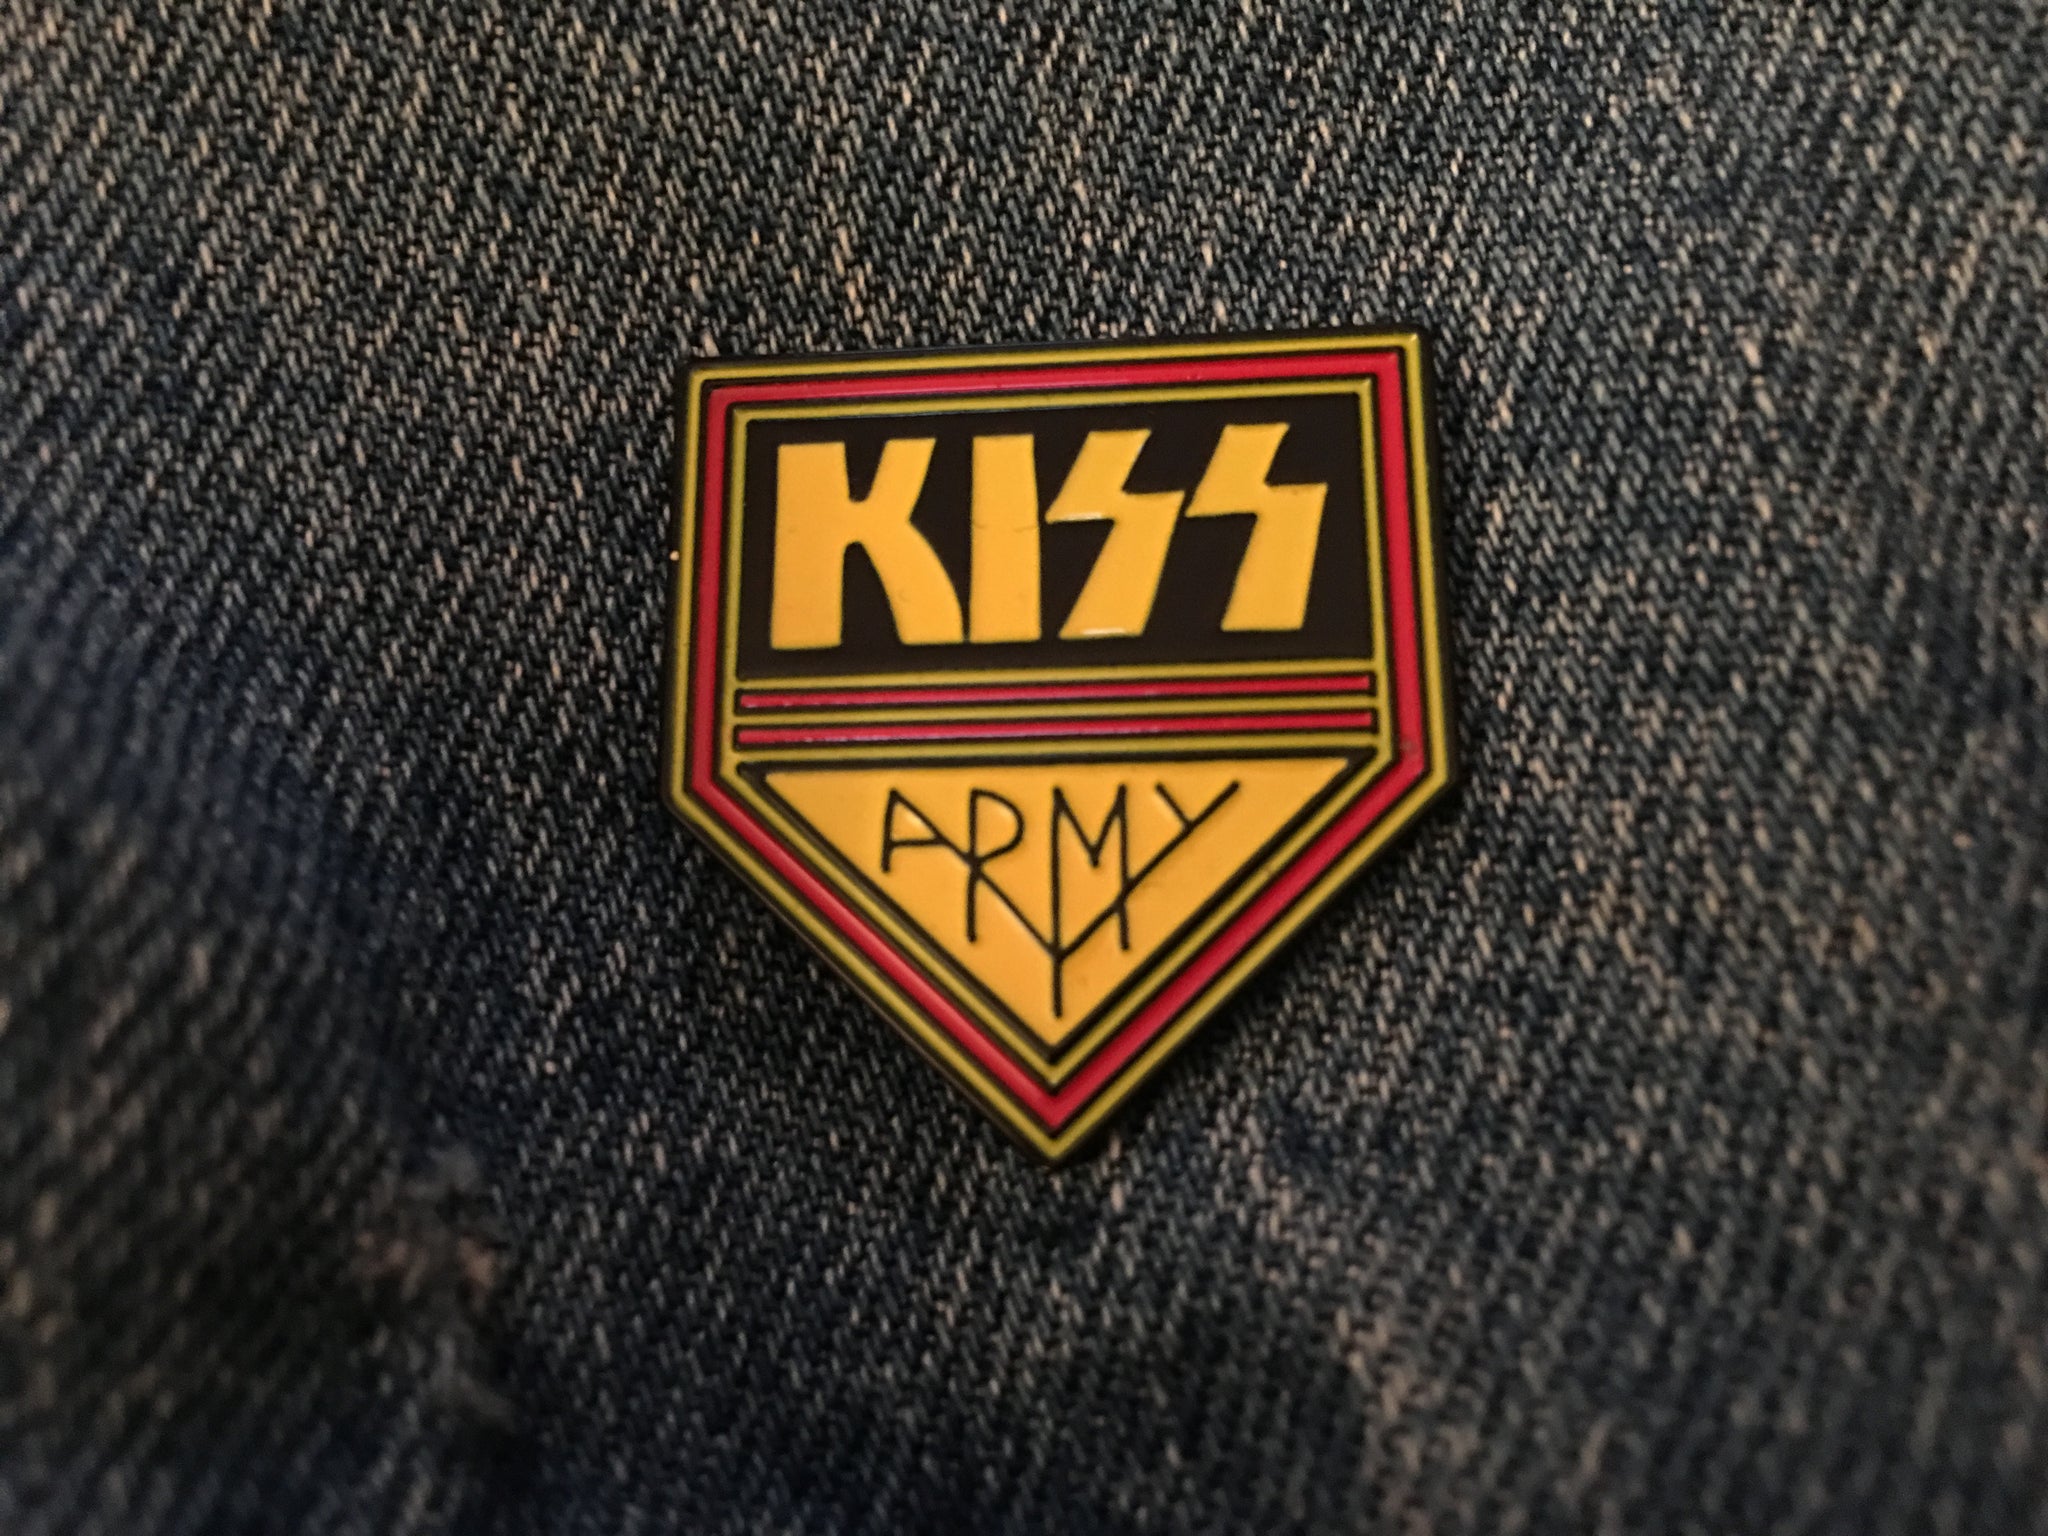 kiss army logo